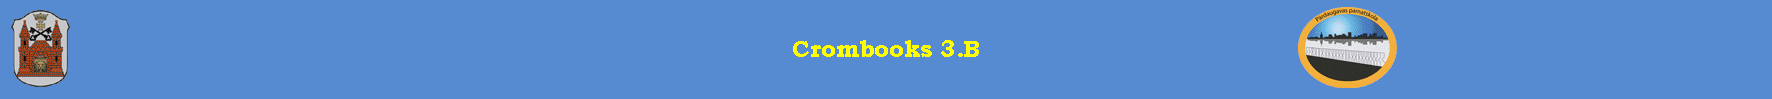 Crombooks 3.B